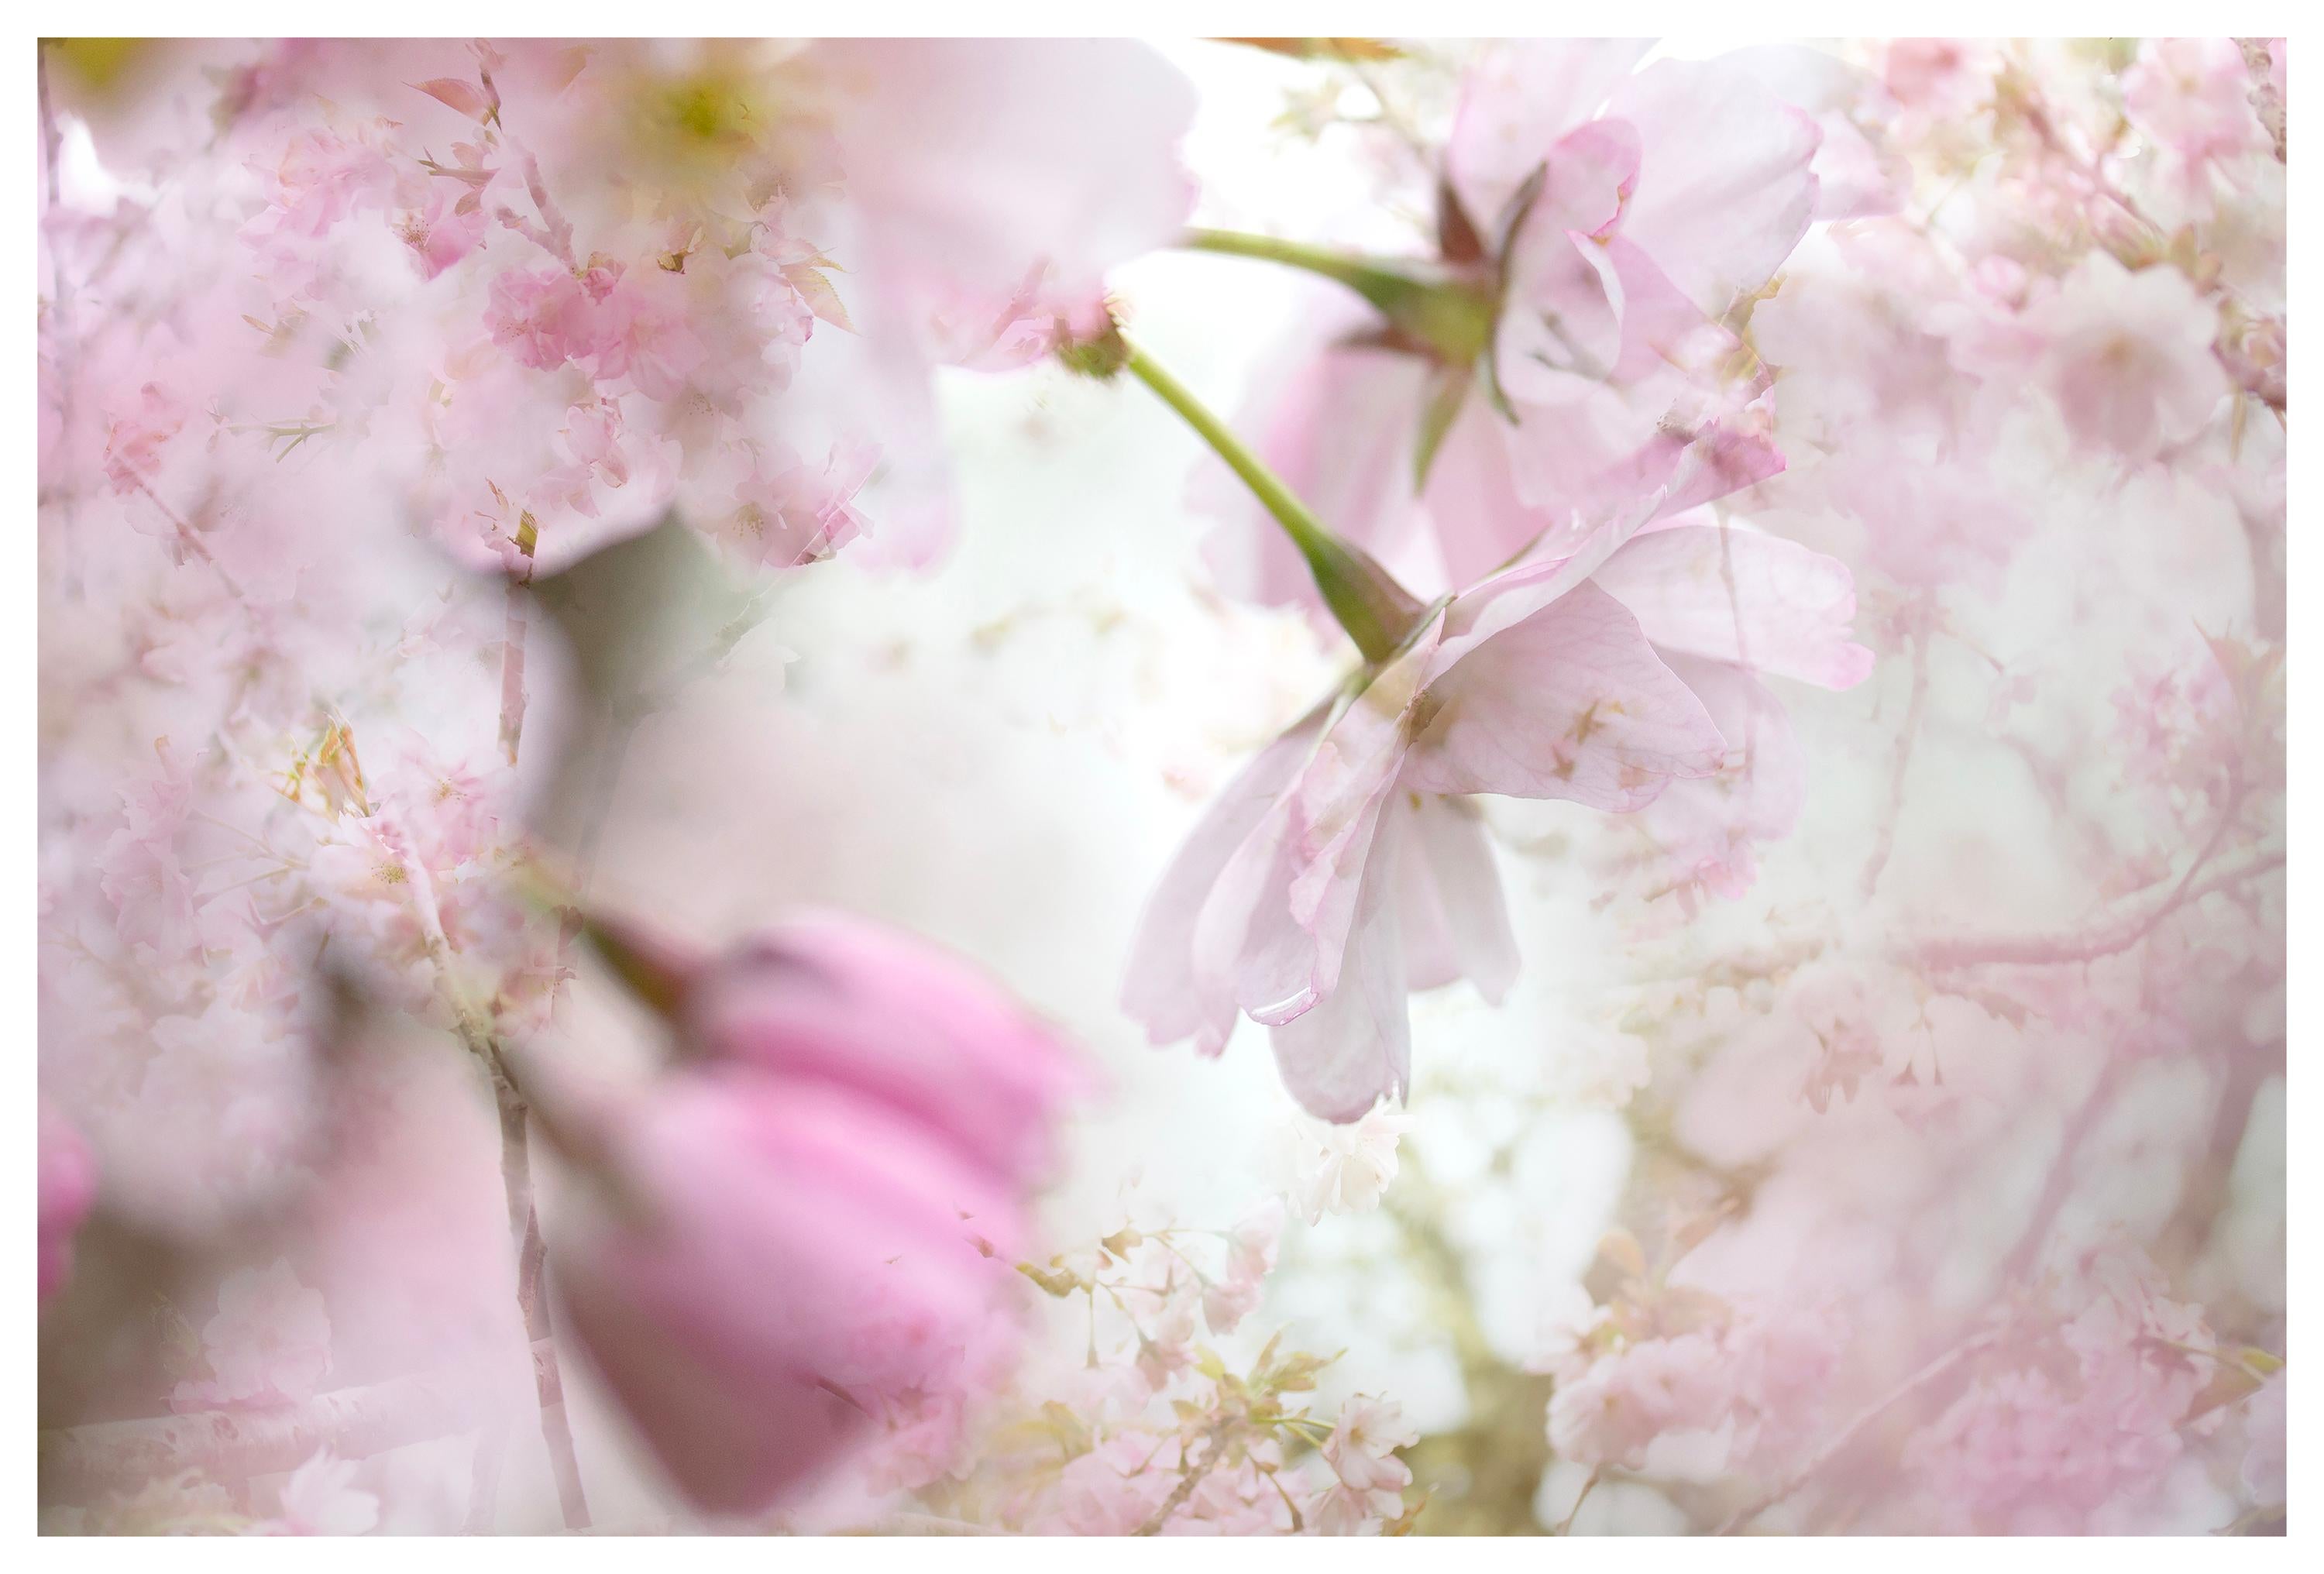 Sophia Milligan Color Photograph – Großformatige Fotografie „Frühling couplet“ Kirschblüten-Sakura-Blumen in Weiß und Rosa